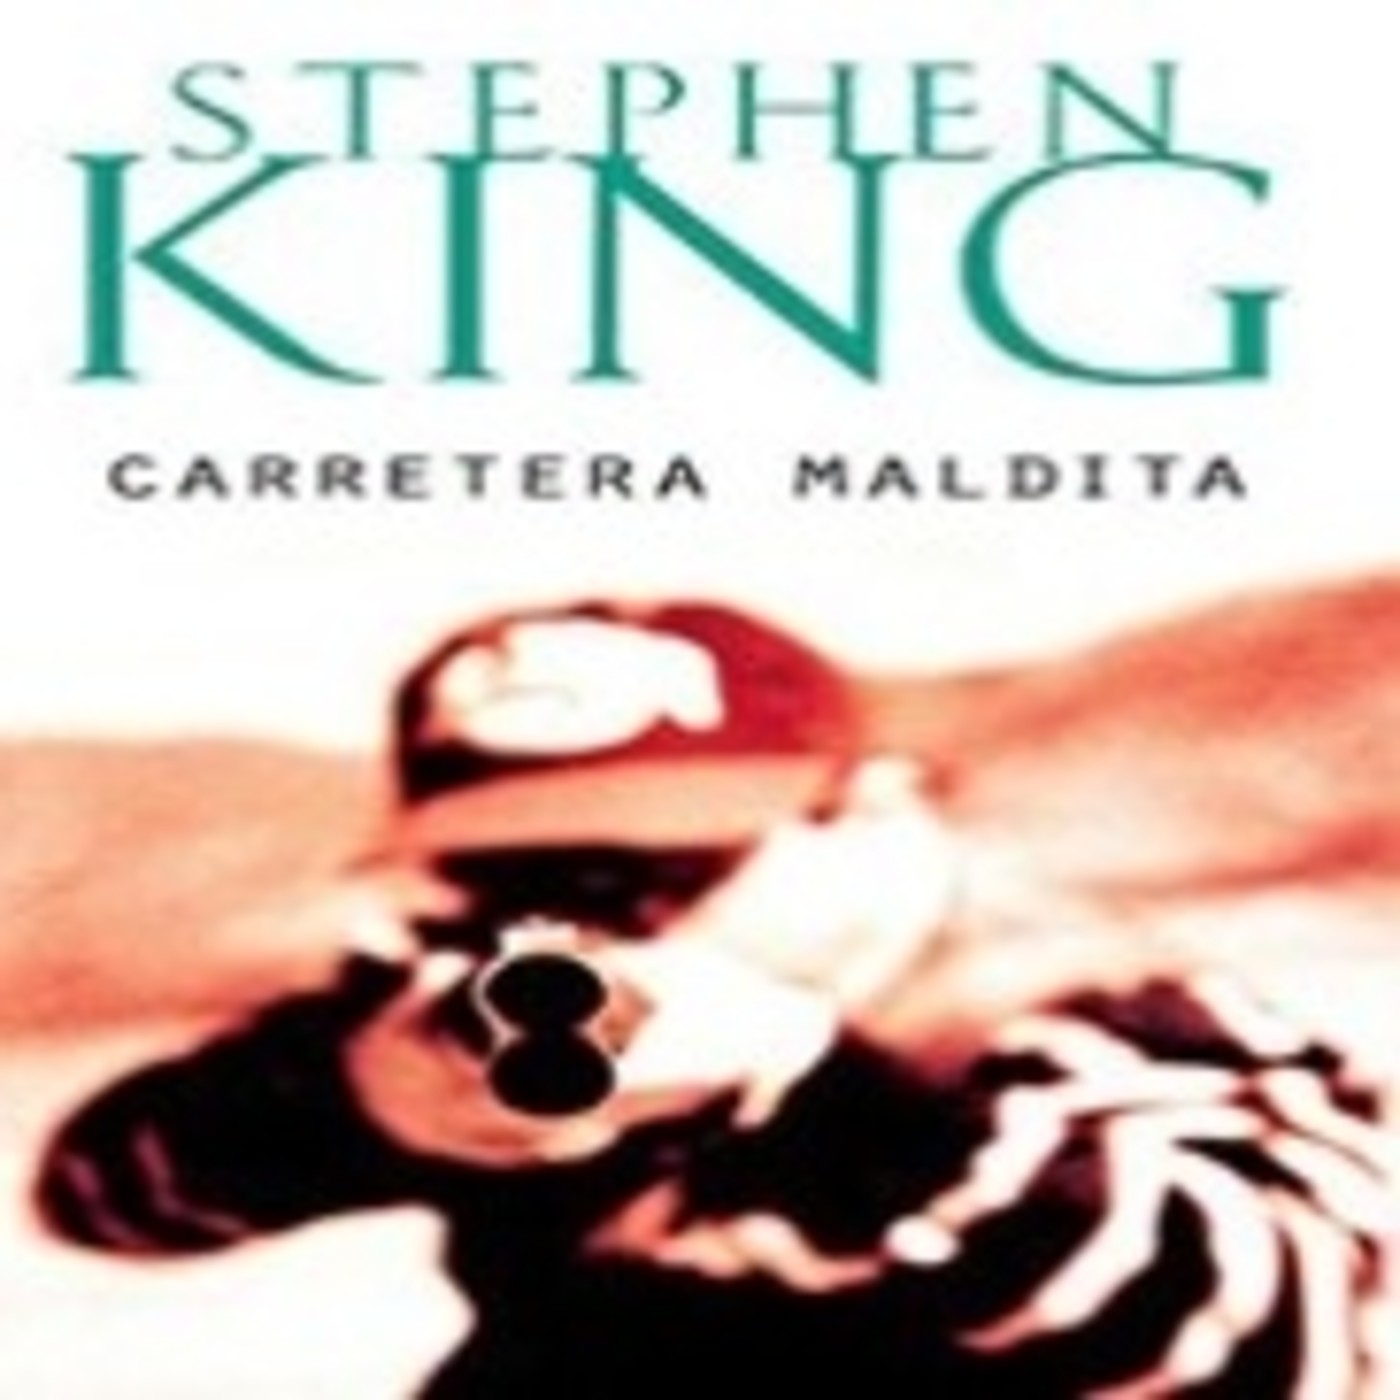 Carretera maldita - Stephen King 1